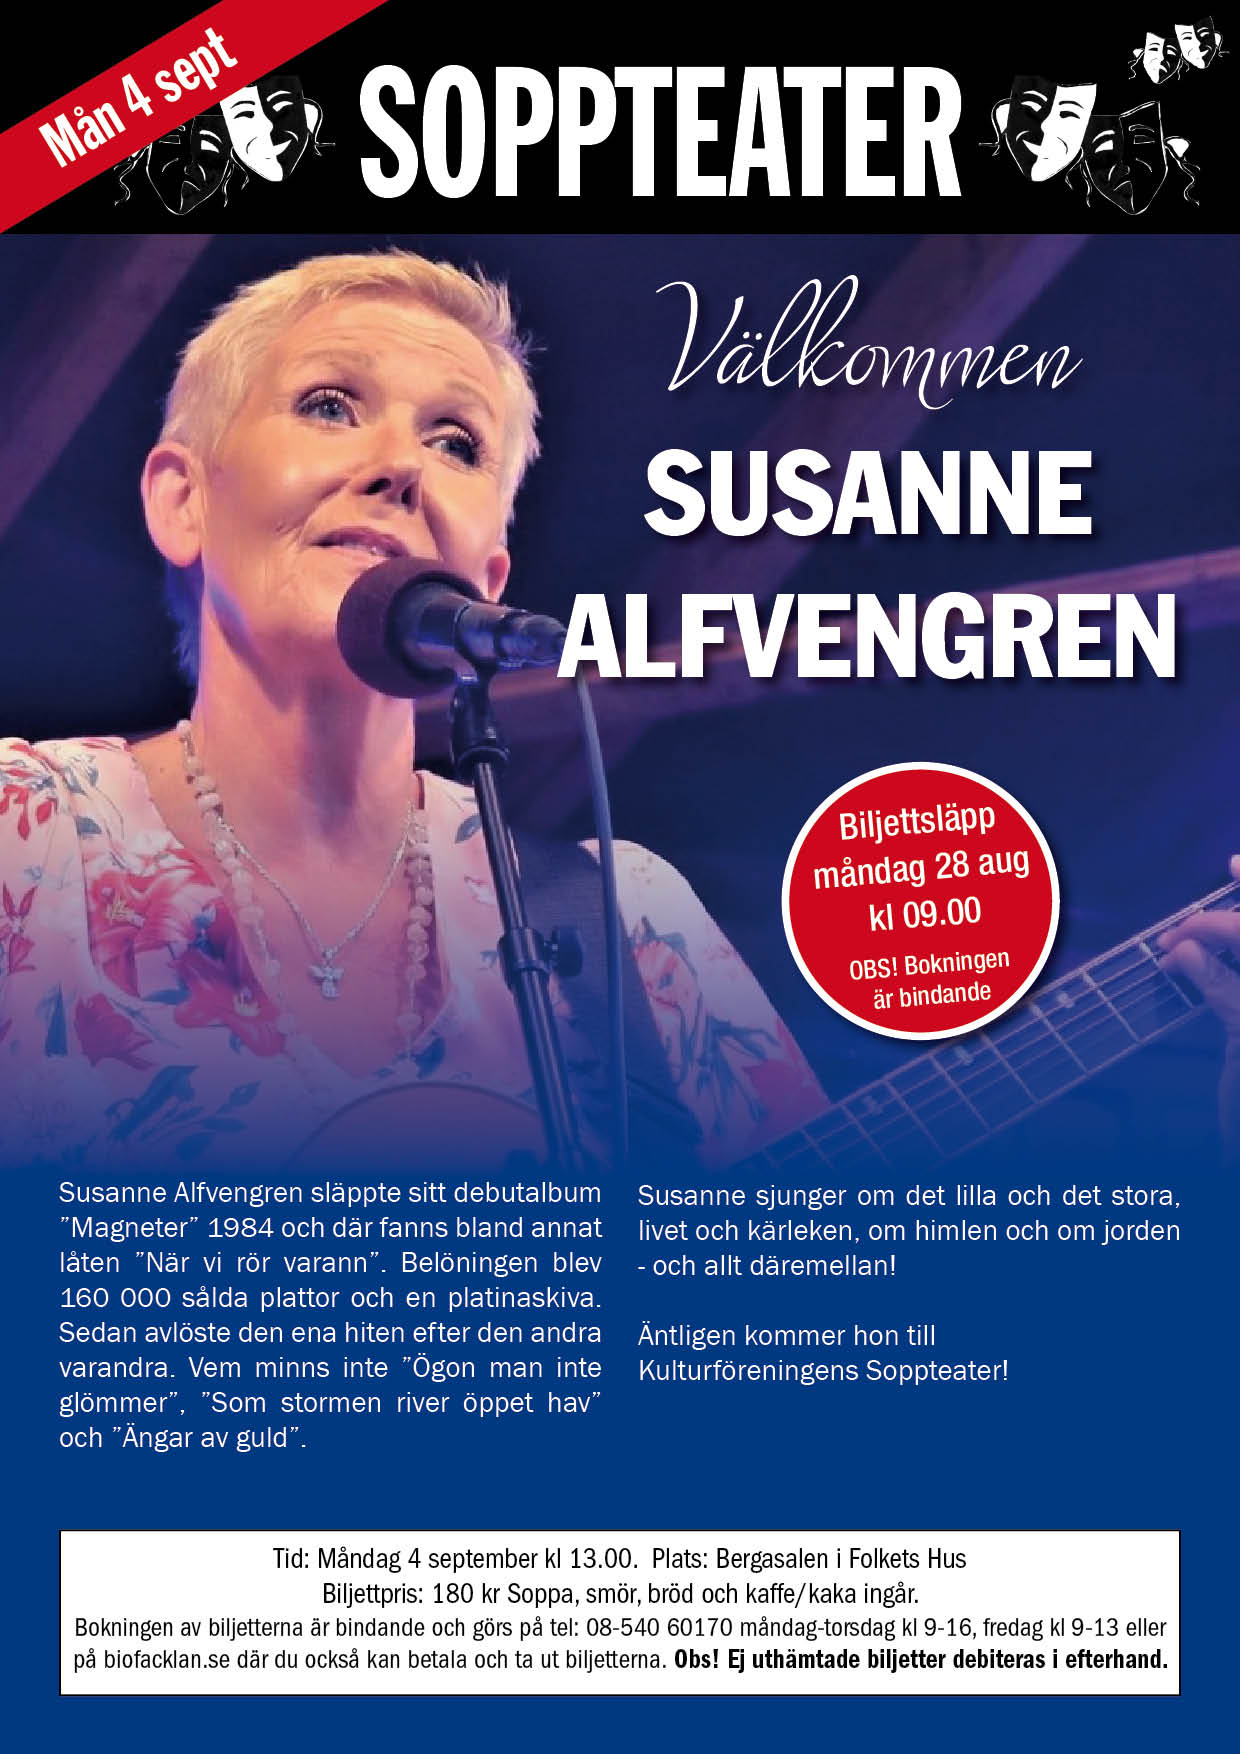 Soppteater: Välkommen Susanne Alfvengren